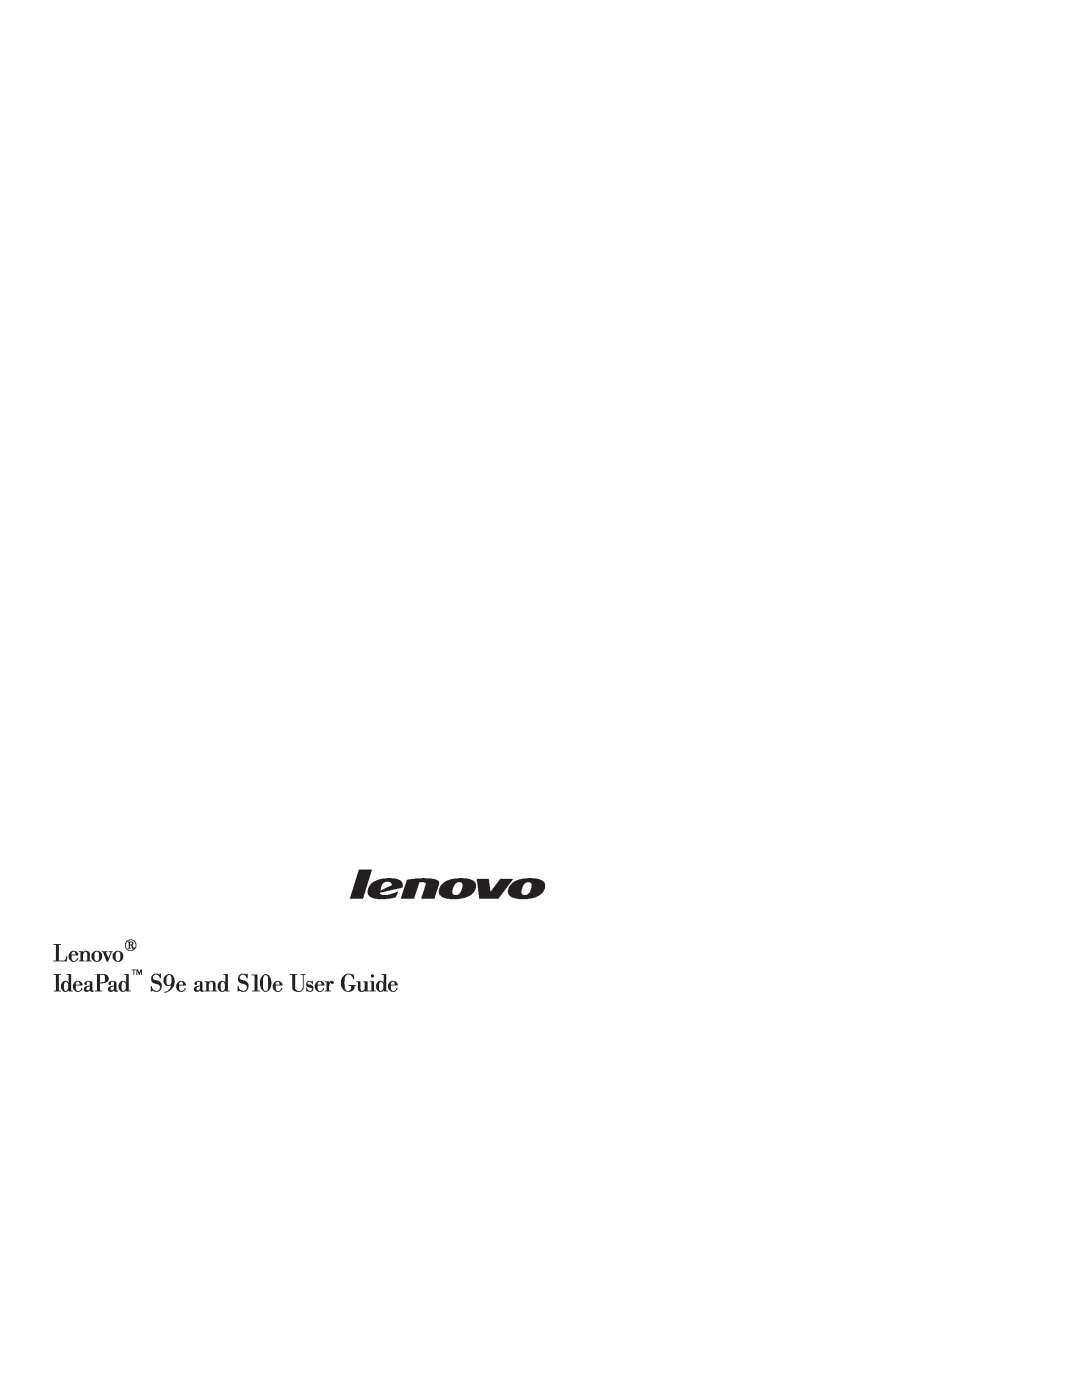 Lenovo S9E, S10E manual Lenovo IdeaPad S9e and S10e User Guide 